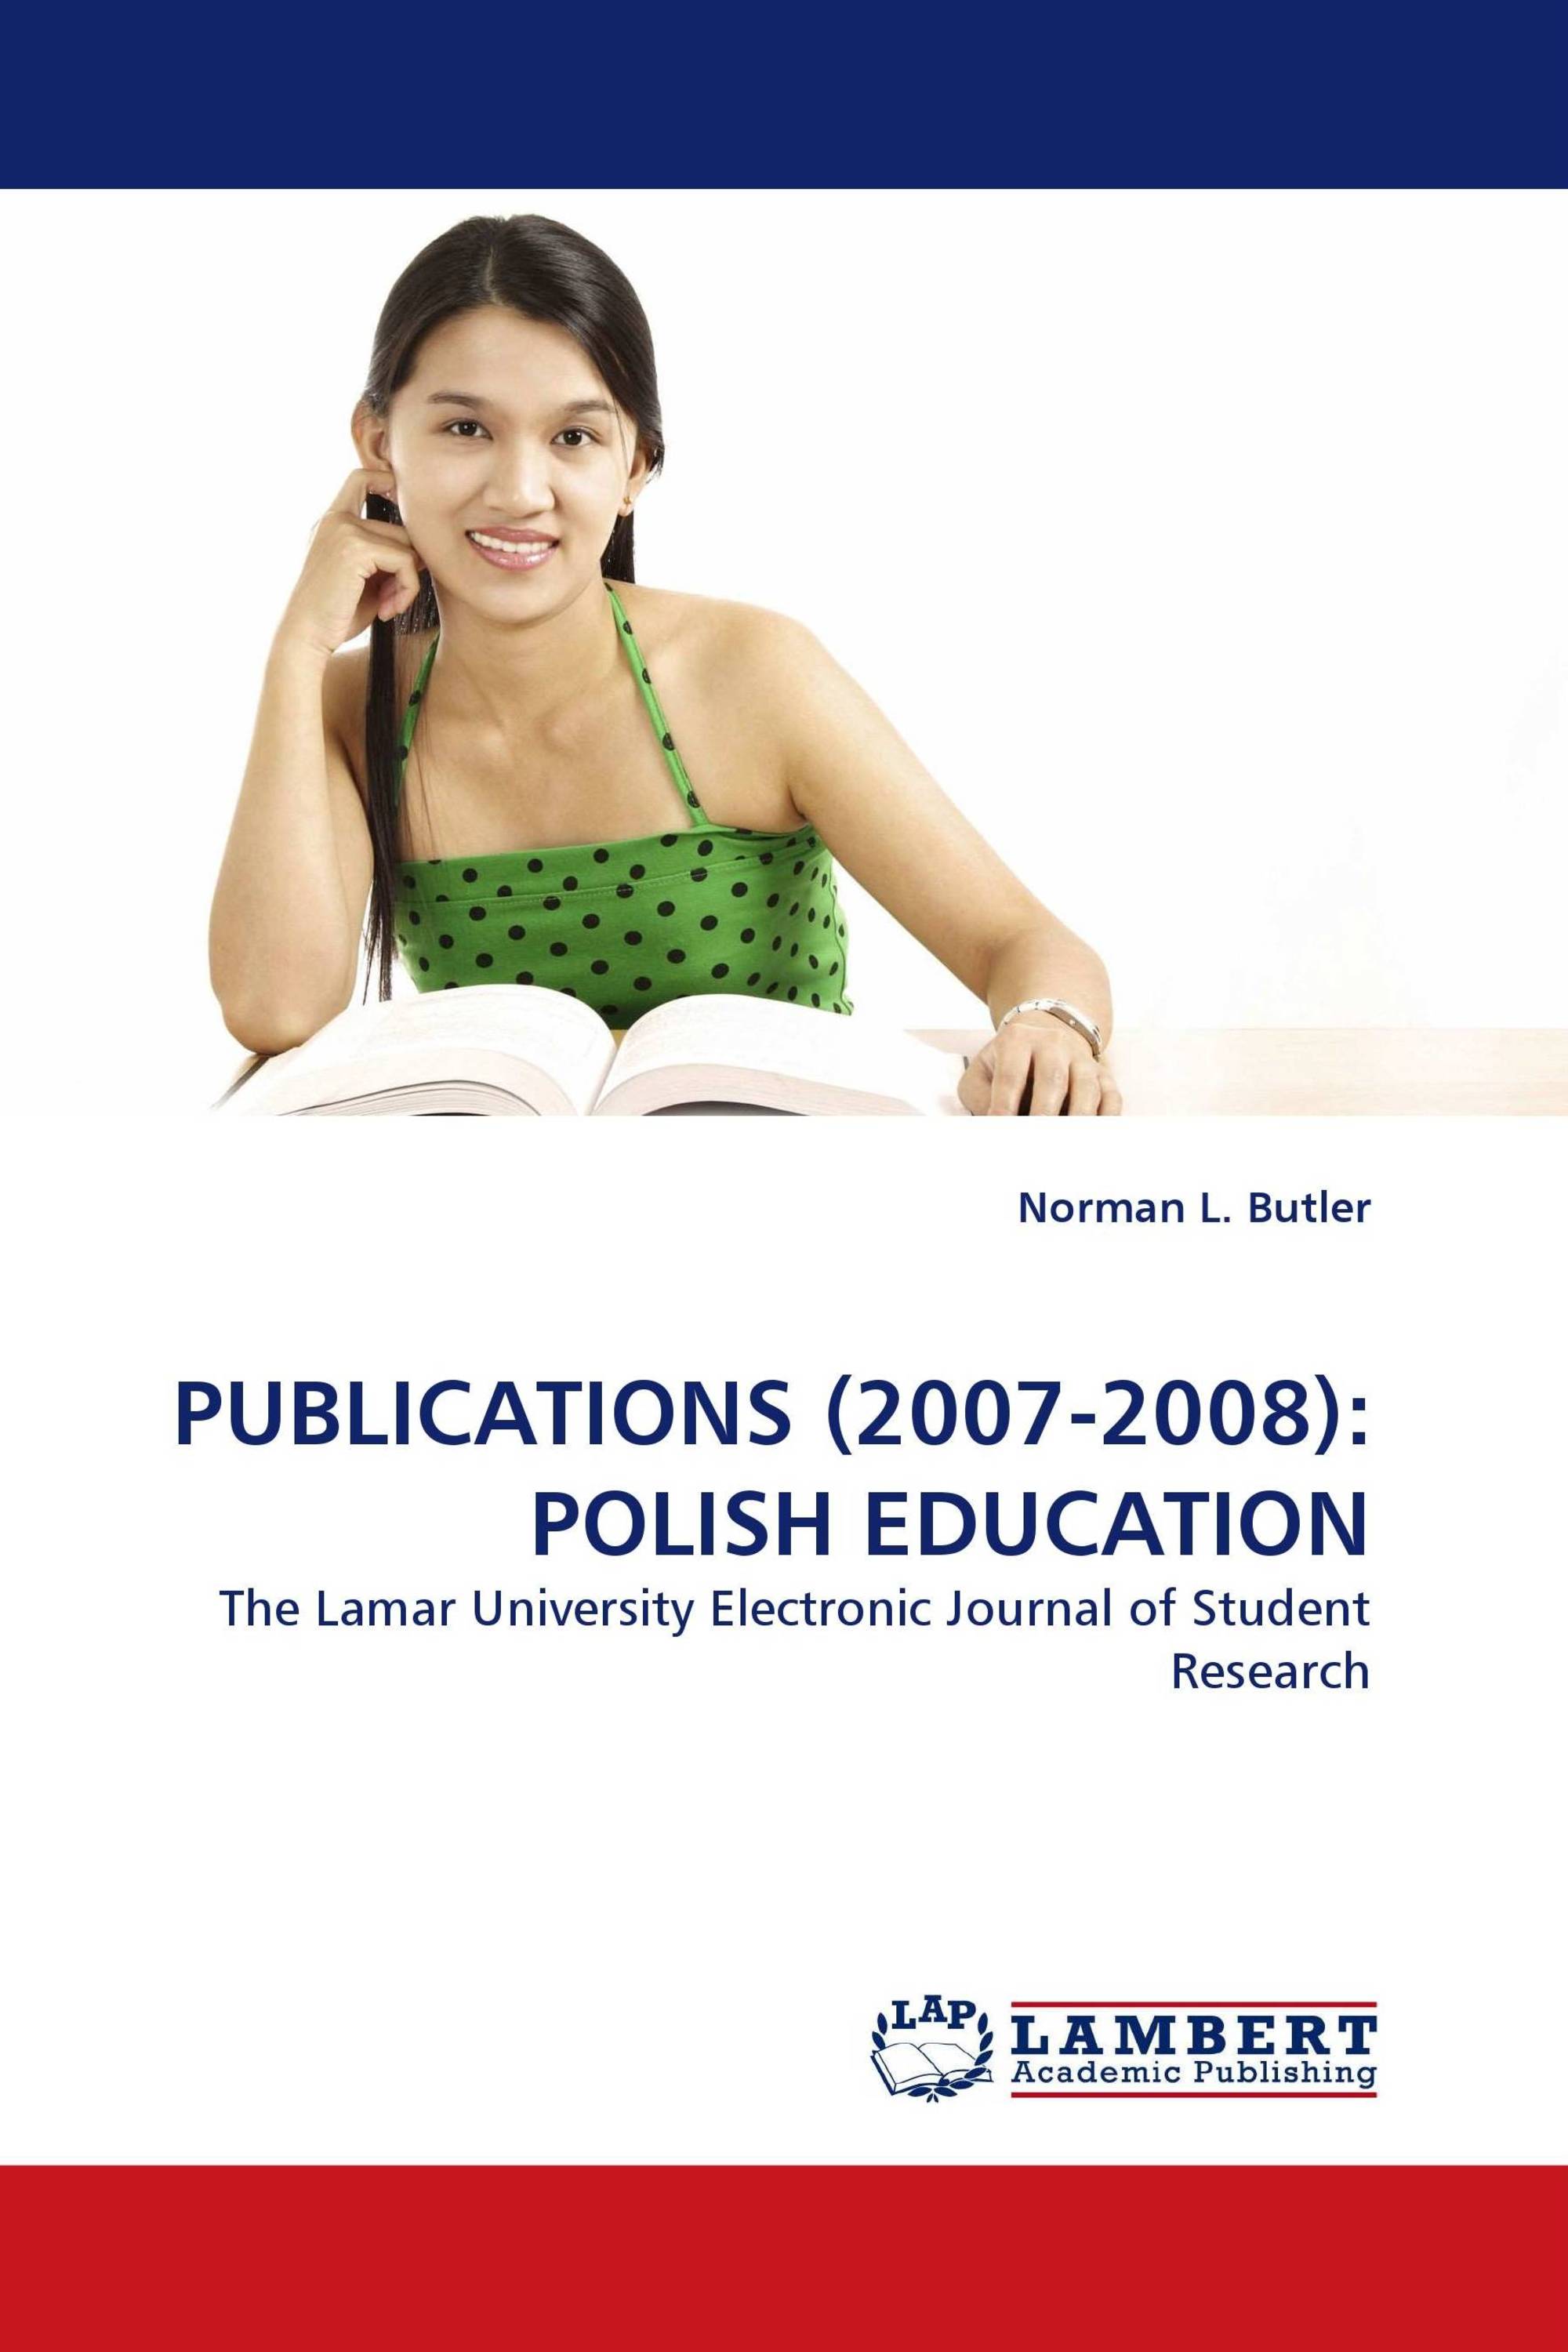 PUBLICATIONS (2007-2008): POLISH EDUCATION